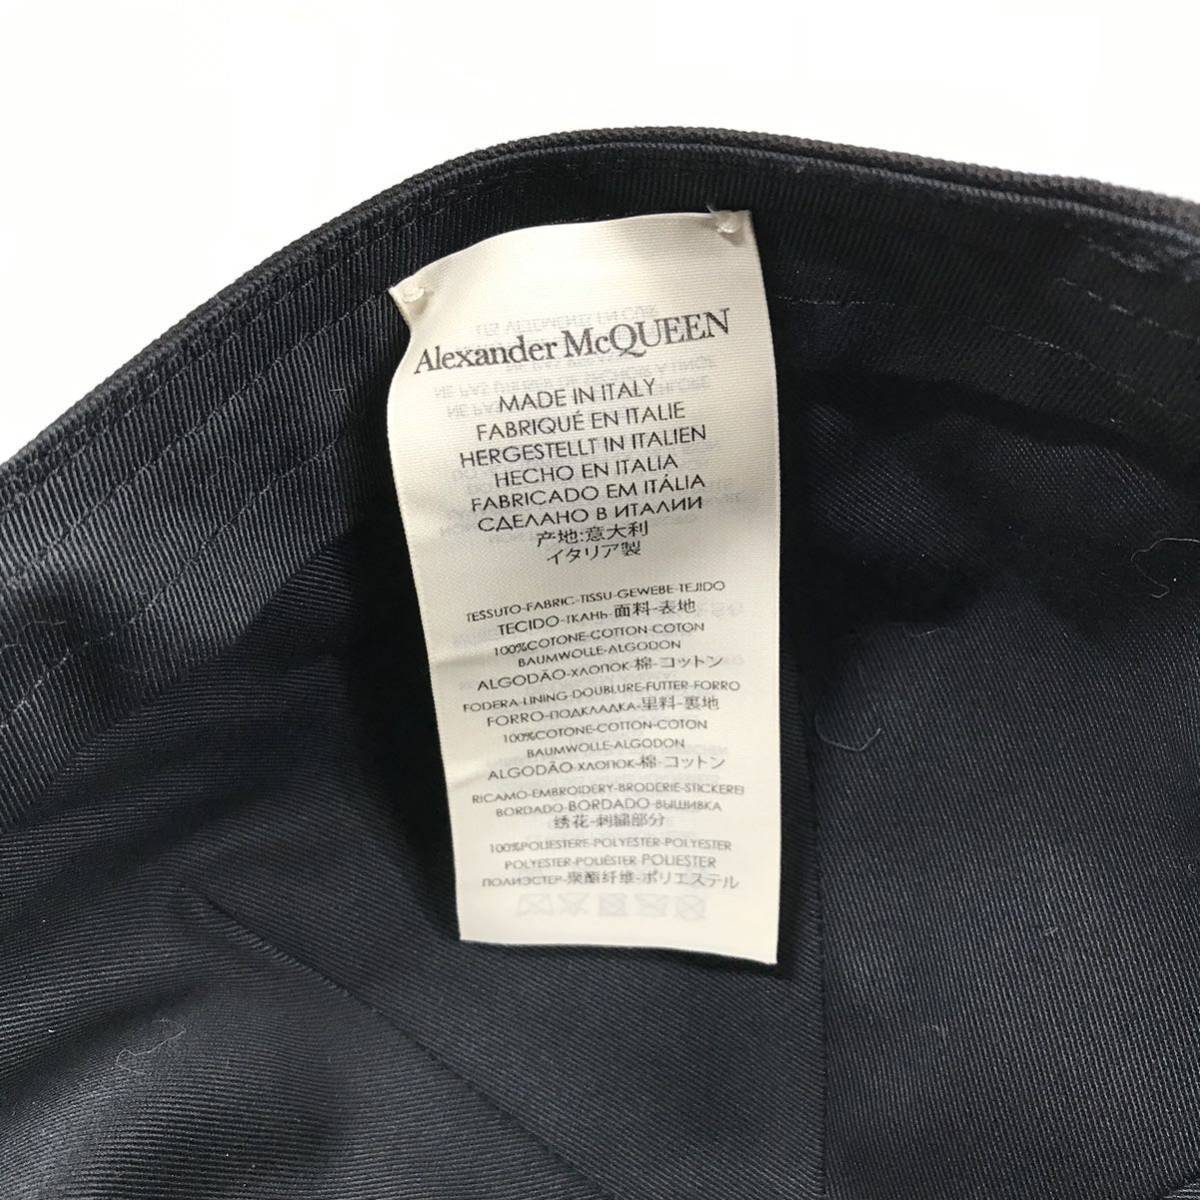 [ Alexander McQueen ] genuine article Alexander McQUEEN Baseball cap black Logo size M/58 cotton hat men's lady's made in Italy 